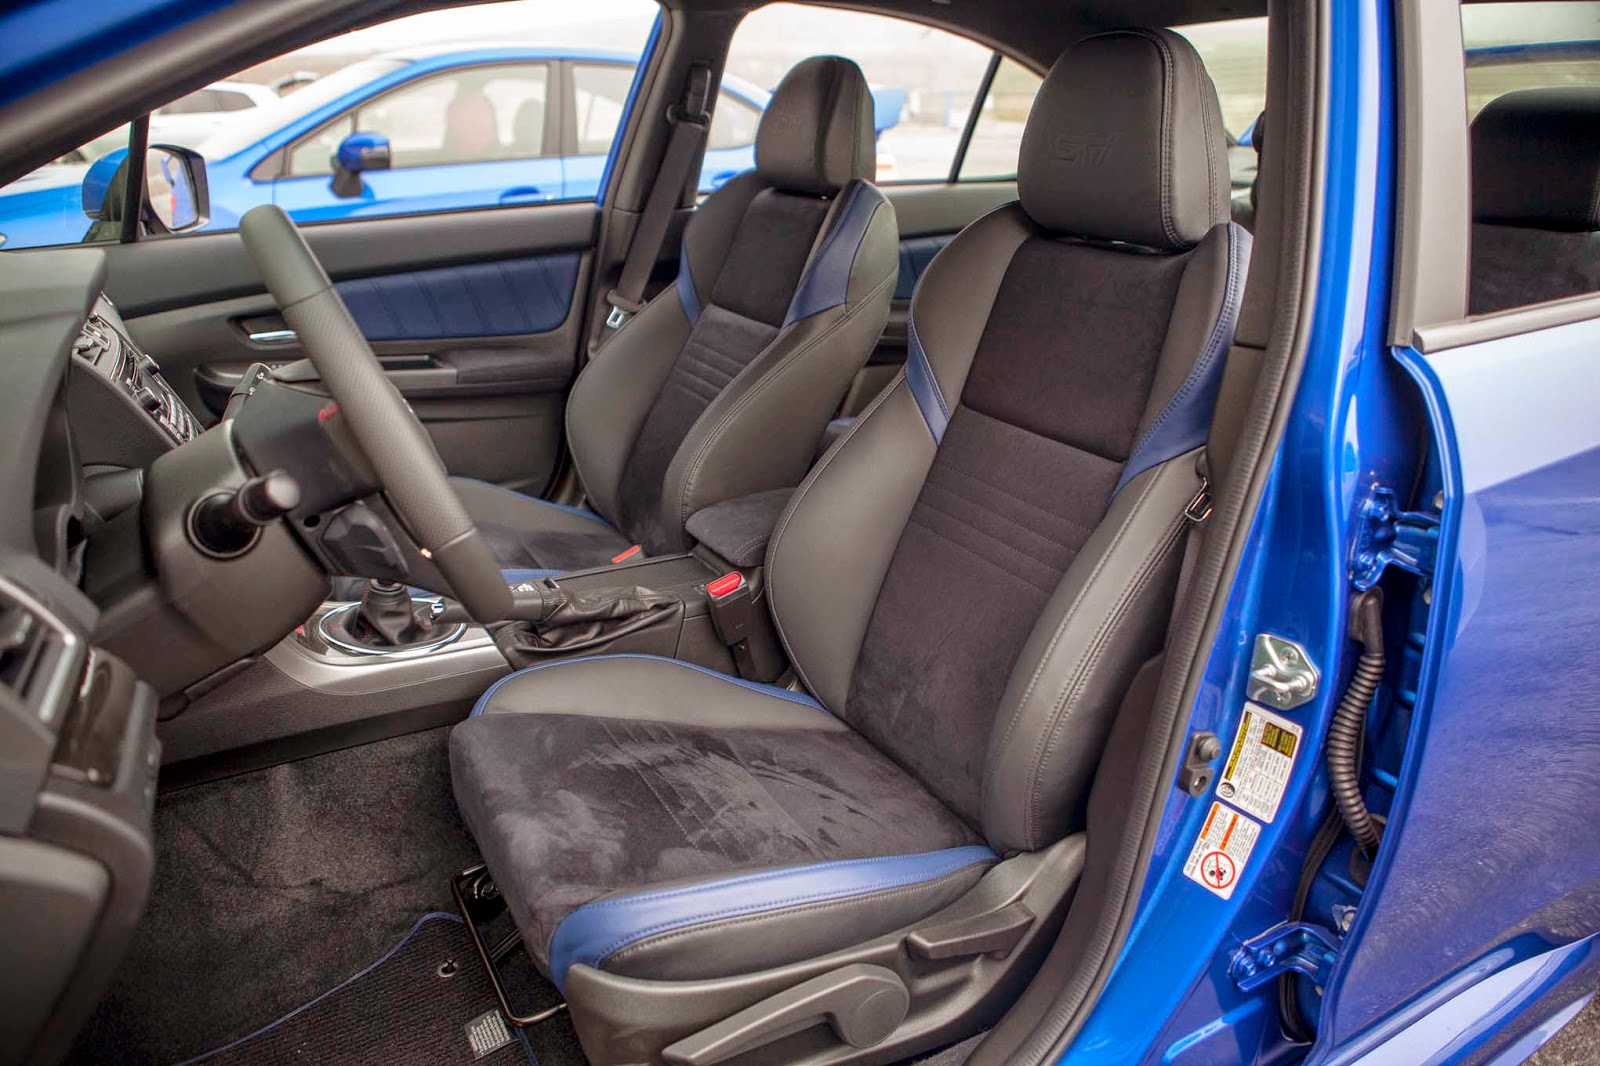 2015 Subaru WRX Release Date, Specs and Price